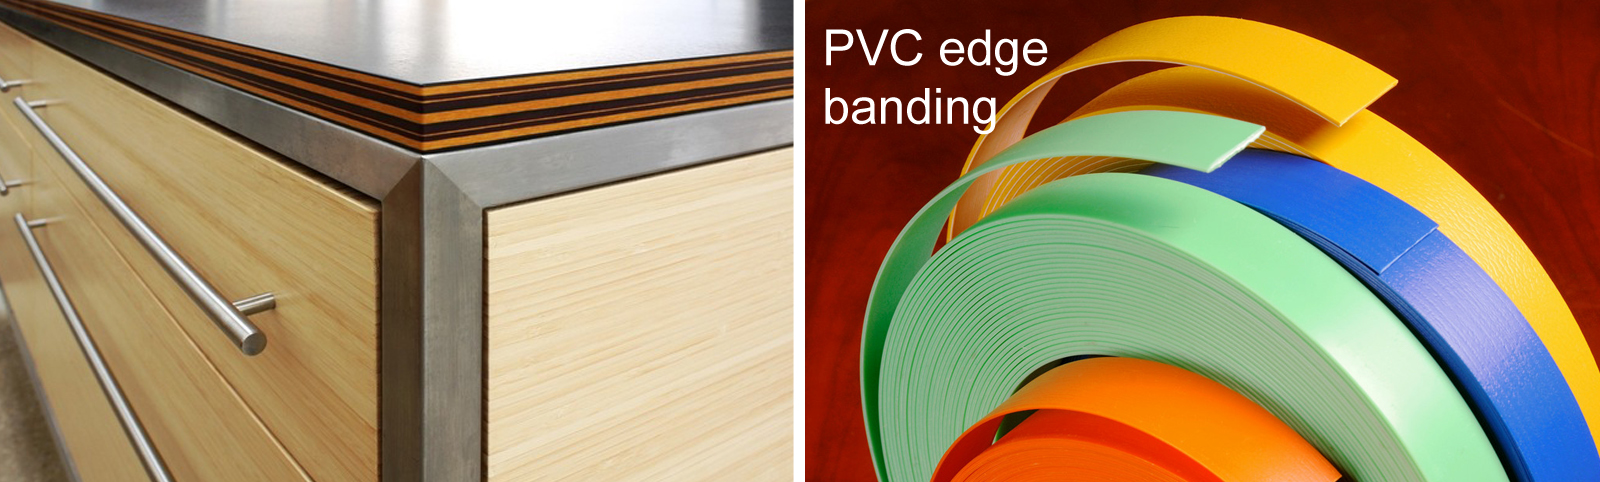 Pvc edge banding